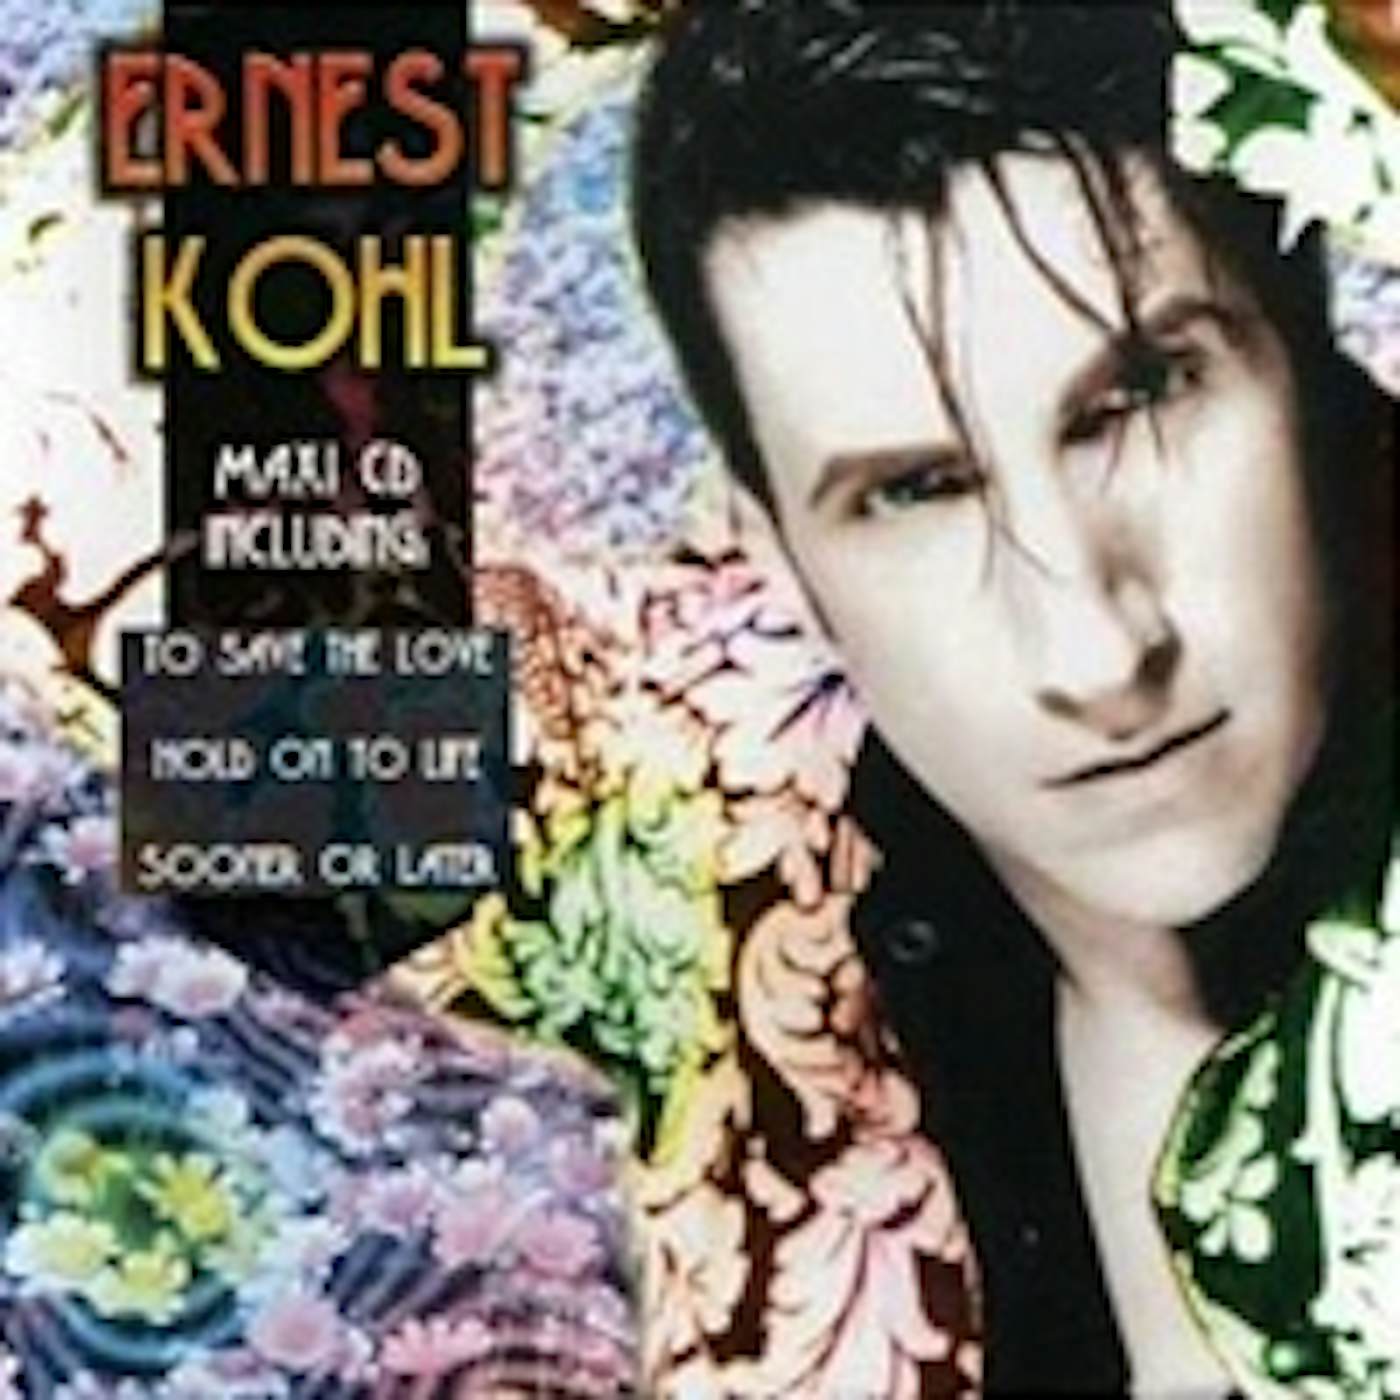 Ernest Kohl SOONER OR LATER/HOLD ON TO LIFE Vinyl Record